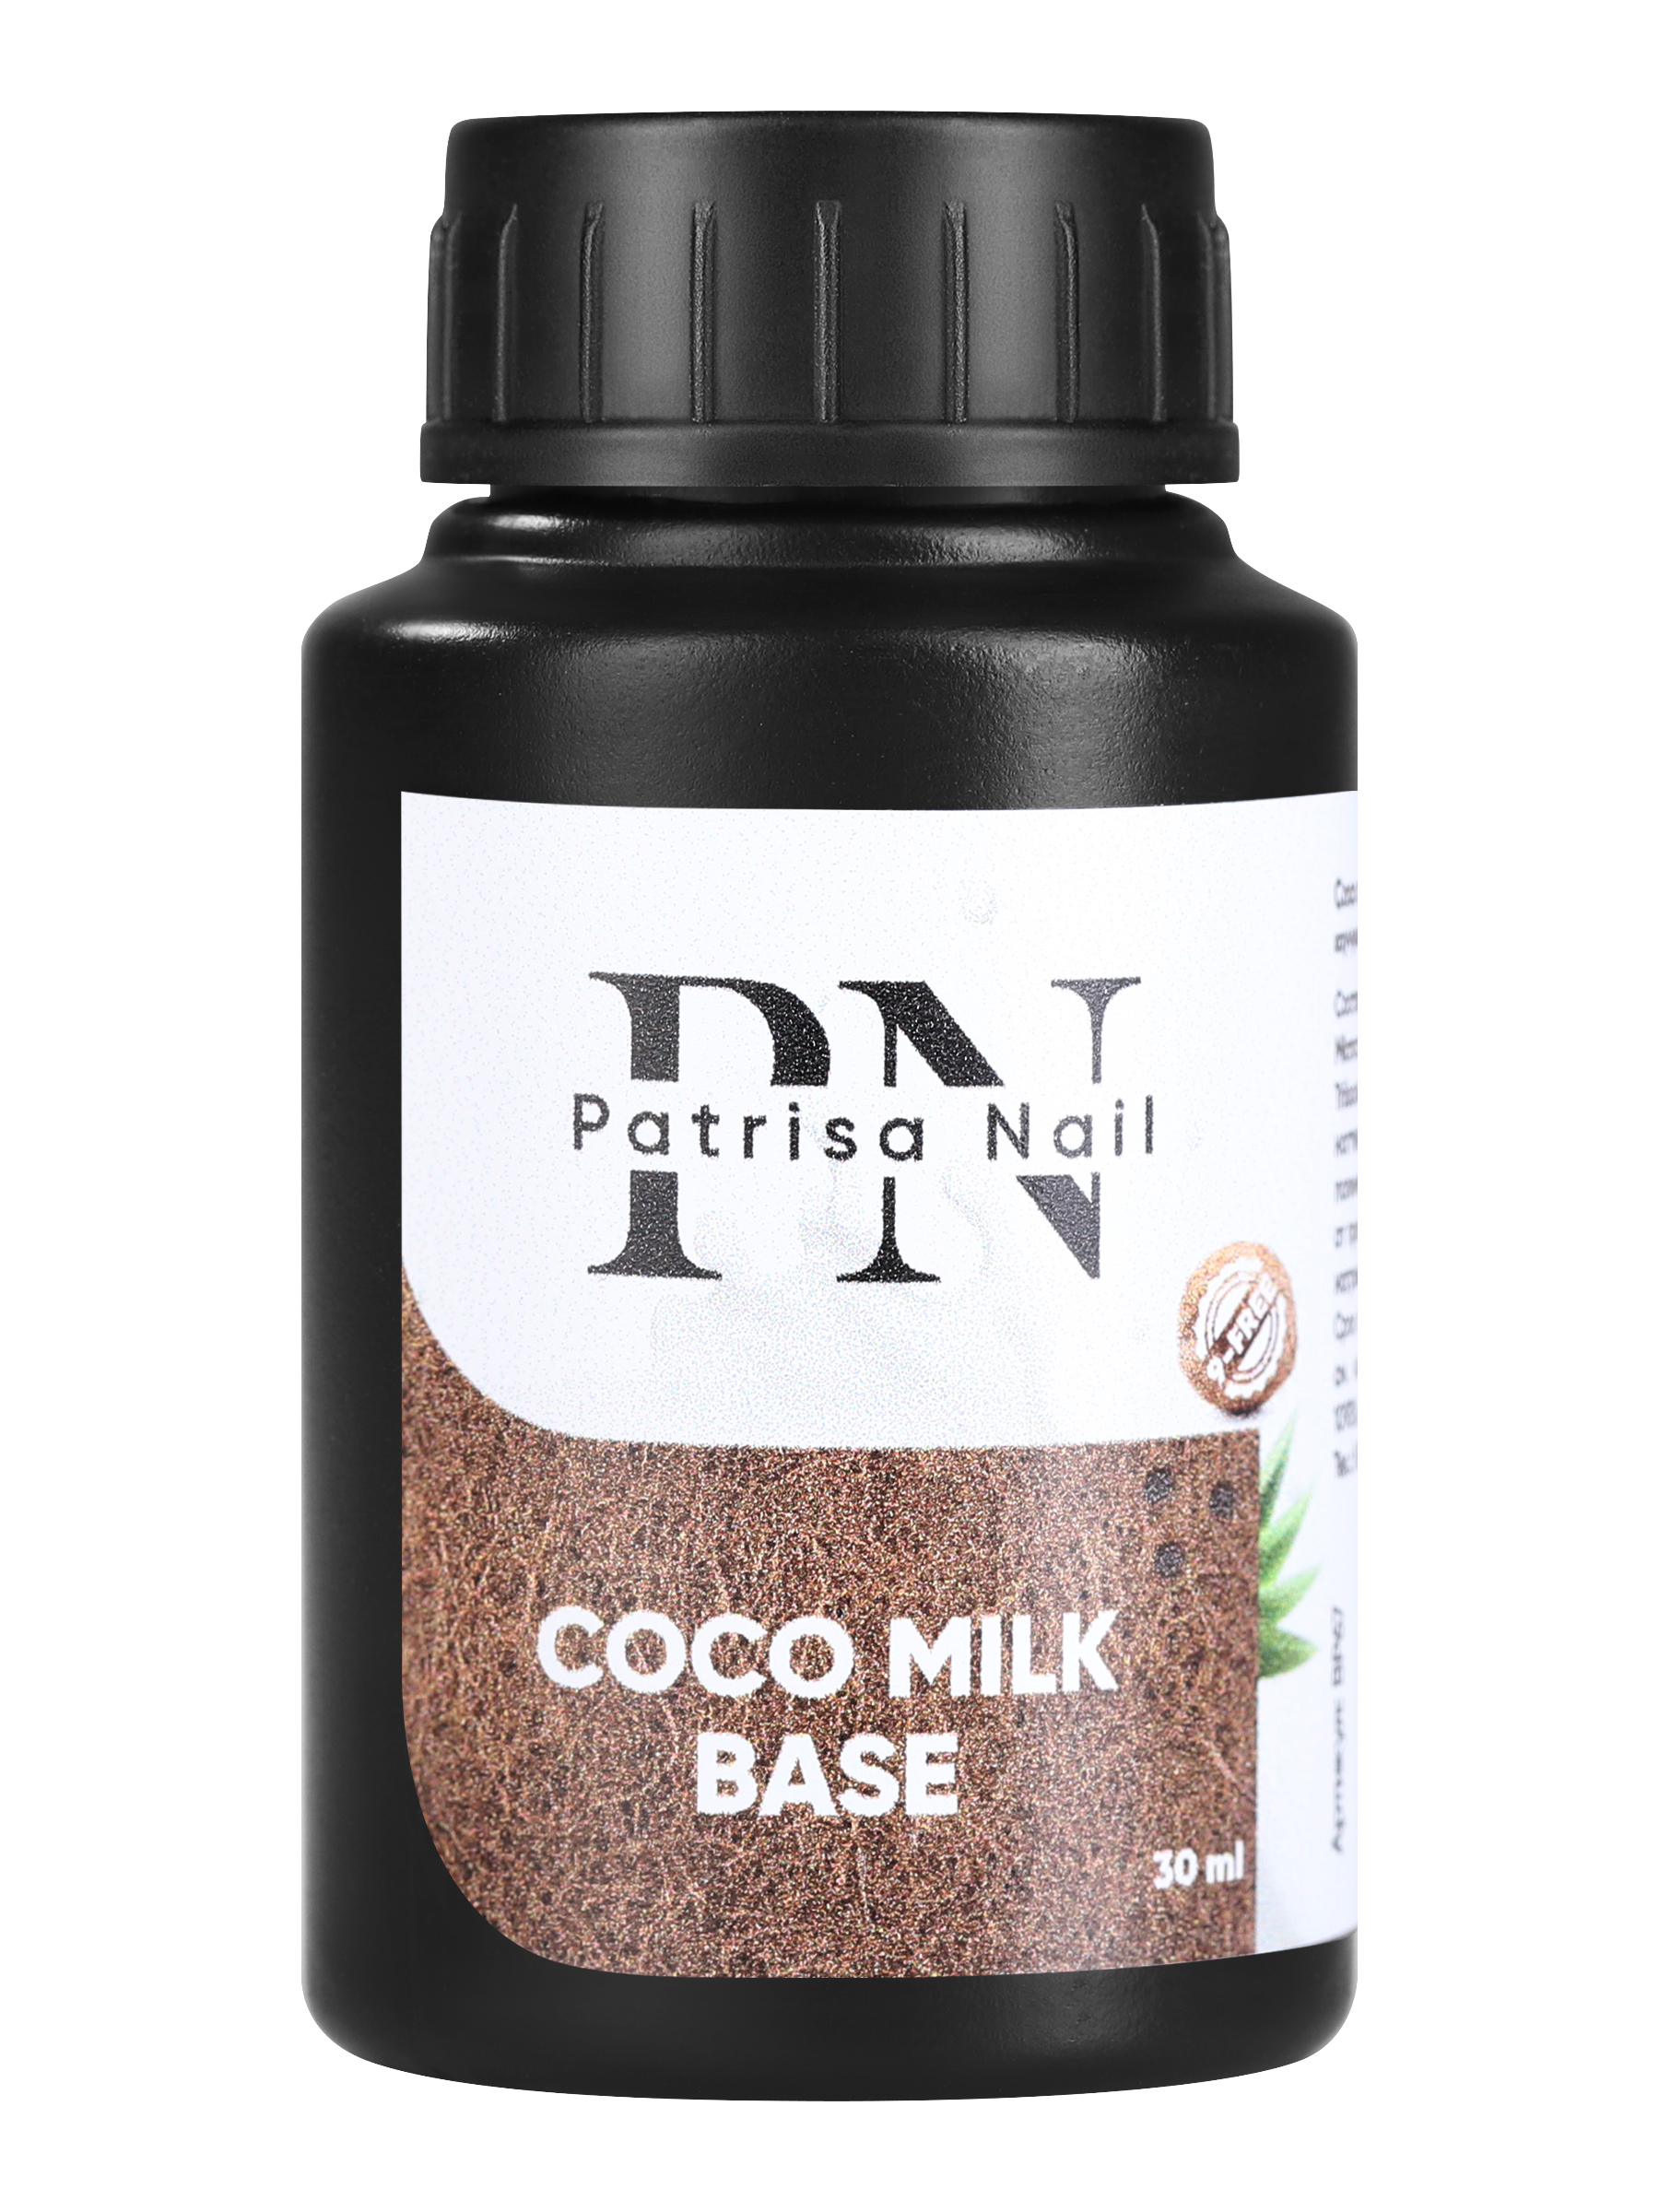 База для гель-лака Patrisa Nail Coco milk base камуфлирующая каучуковая молочная, 30 мл топ patrisa nail milk top молочный 12 мл